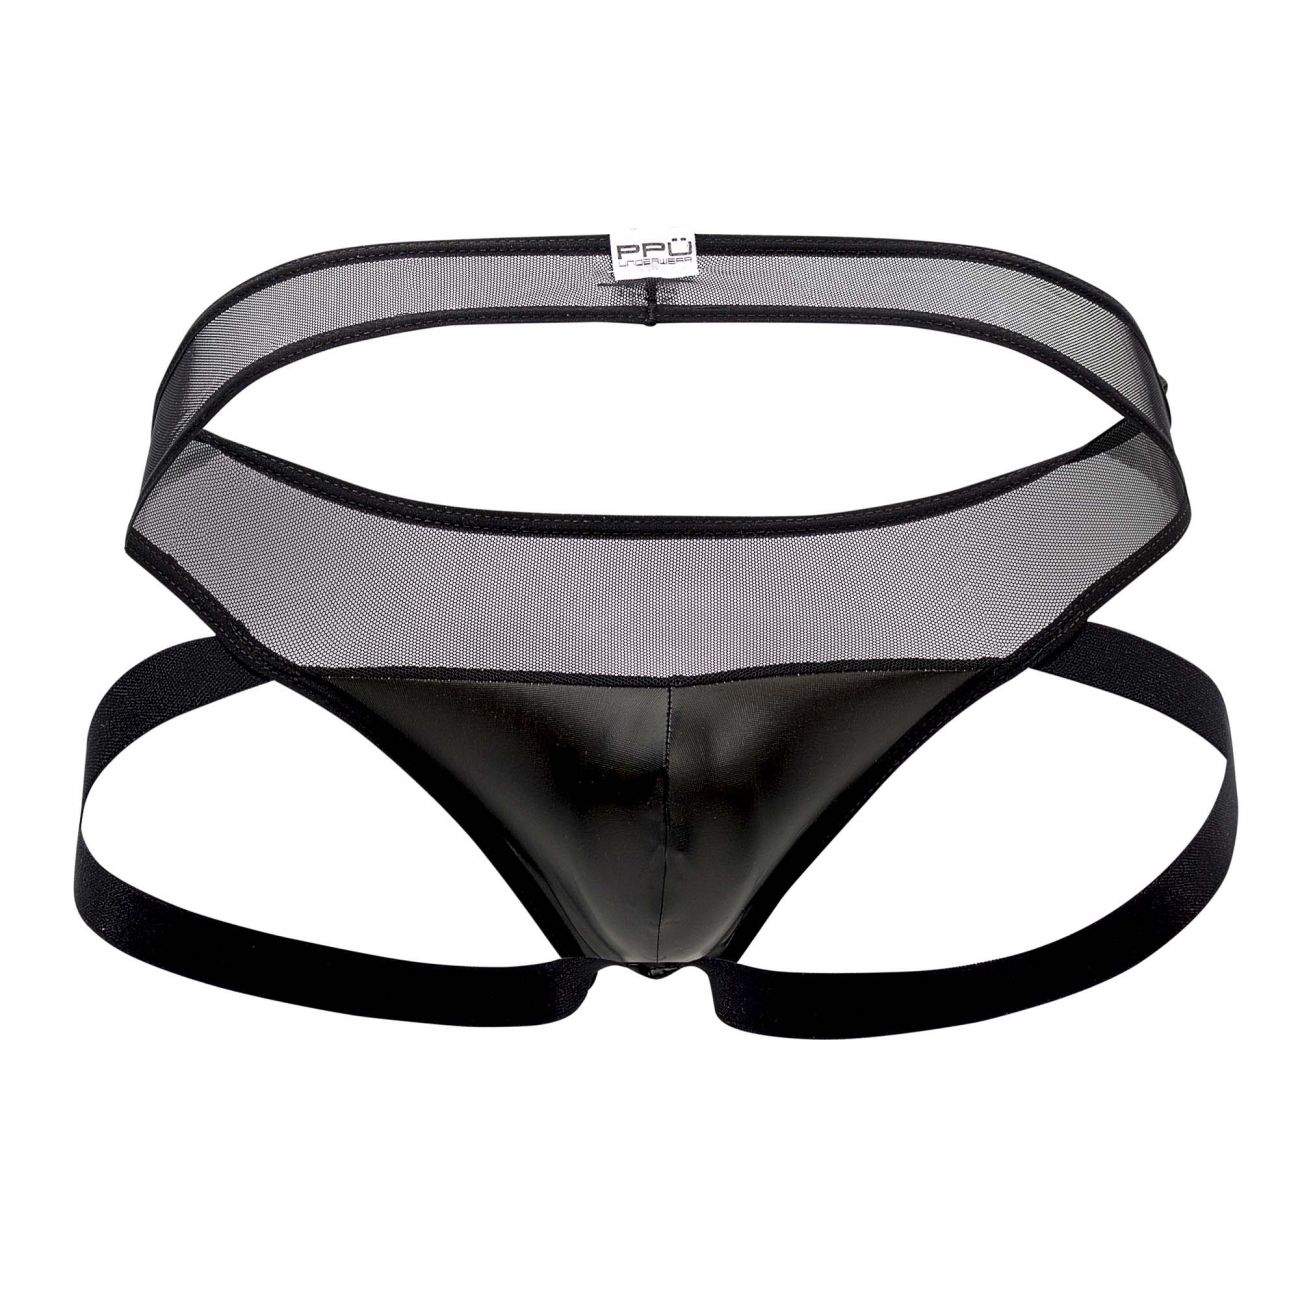 PPU Underwear Fashion Jockstraps for Men | eBay